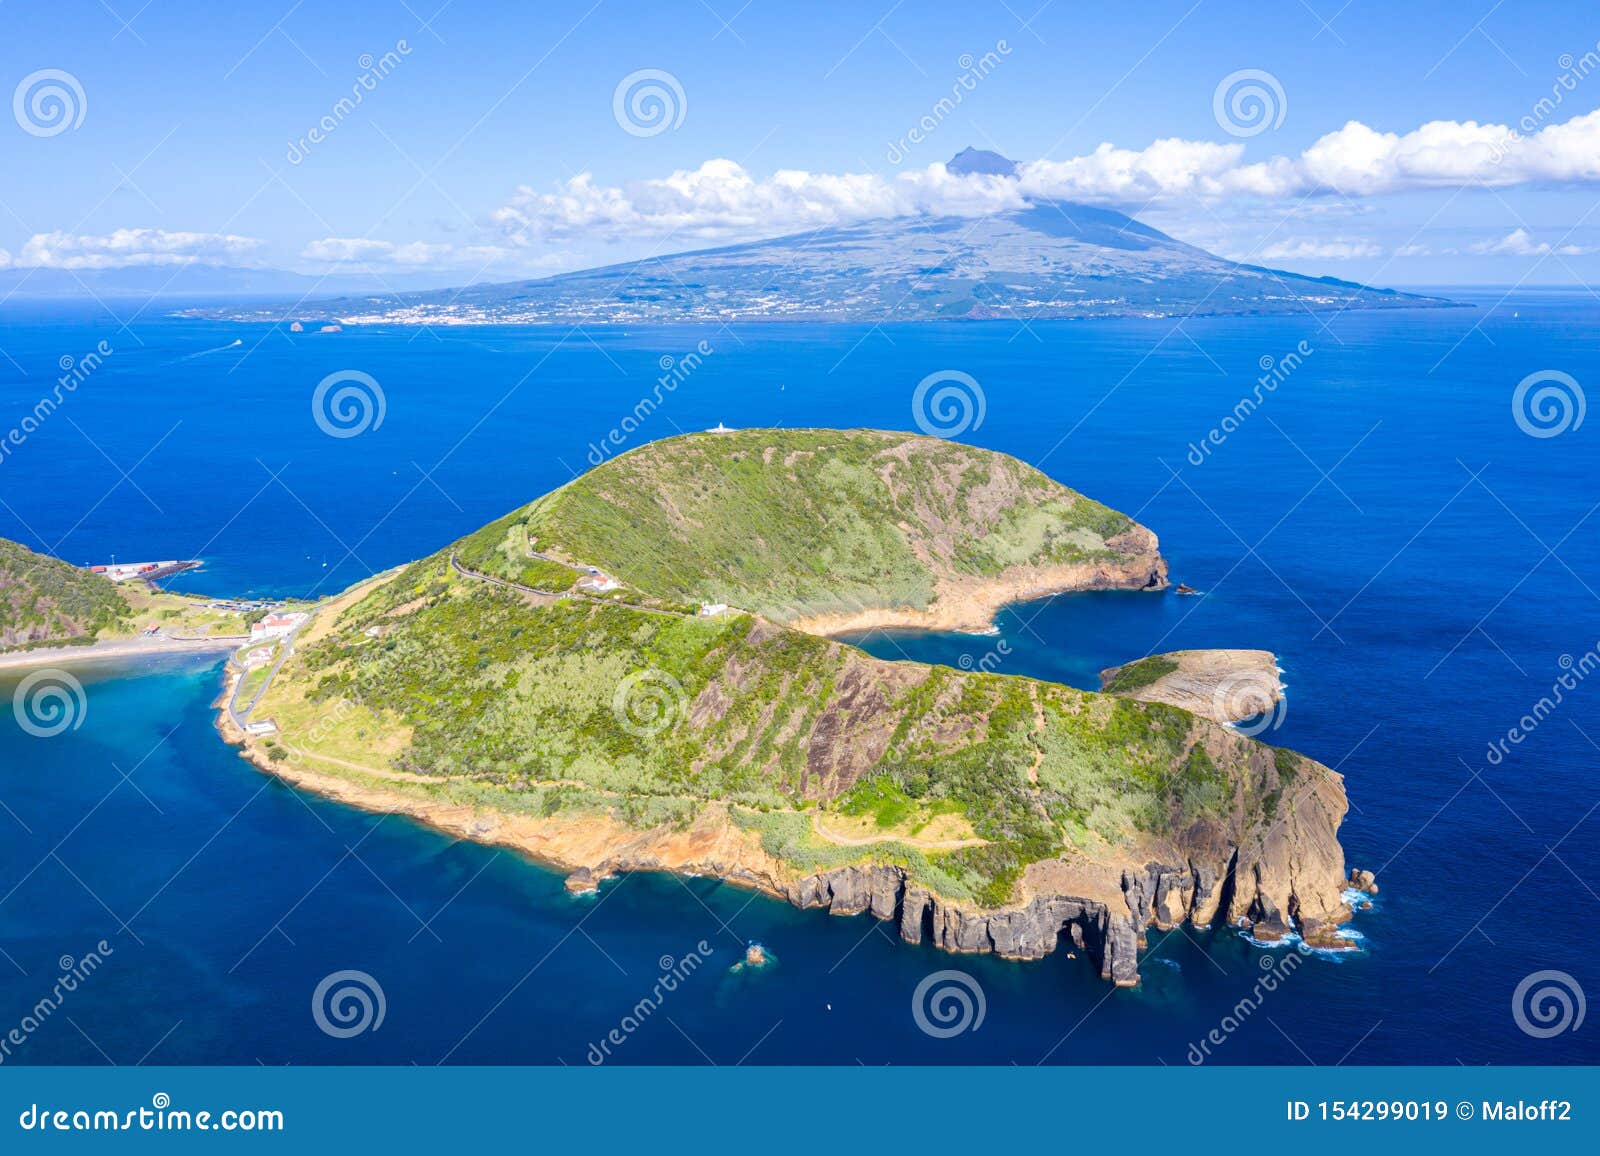 extinct volcano craters of caldeirinhas, mount guia, horta, faial island with the peak of pico volcanic mountain, azores, portugal